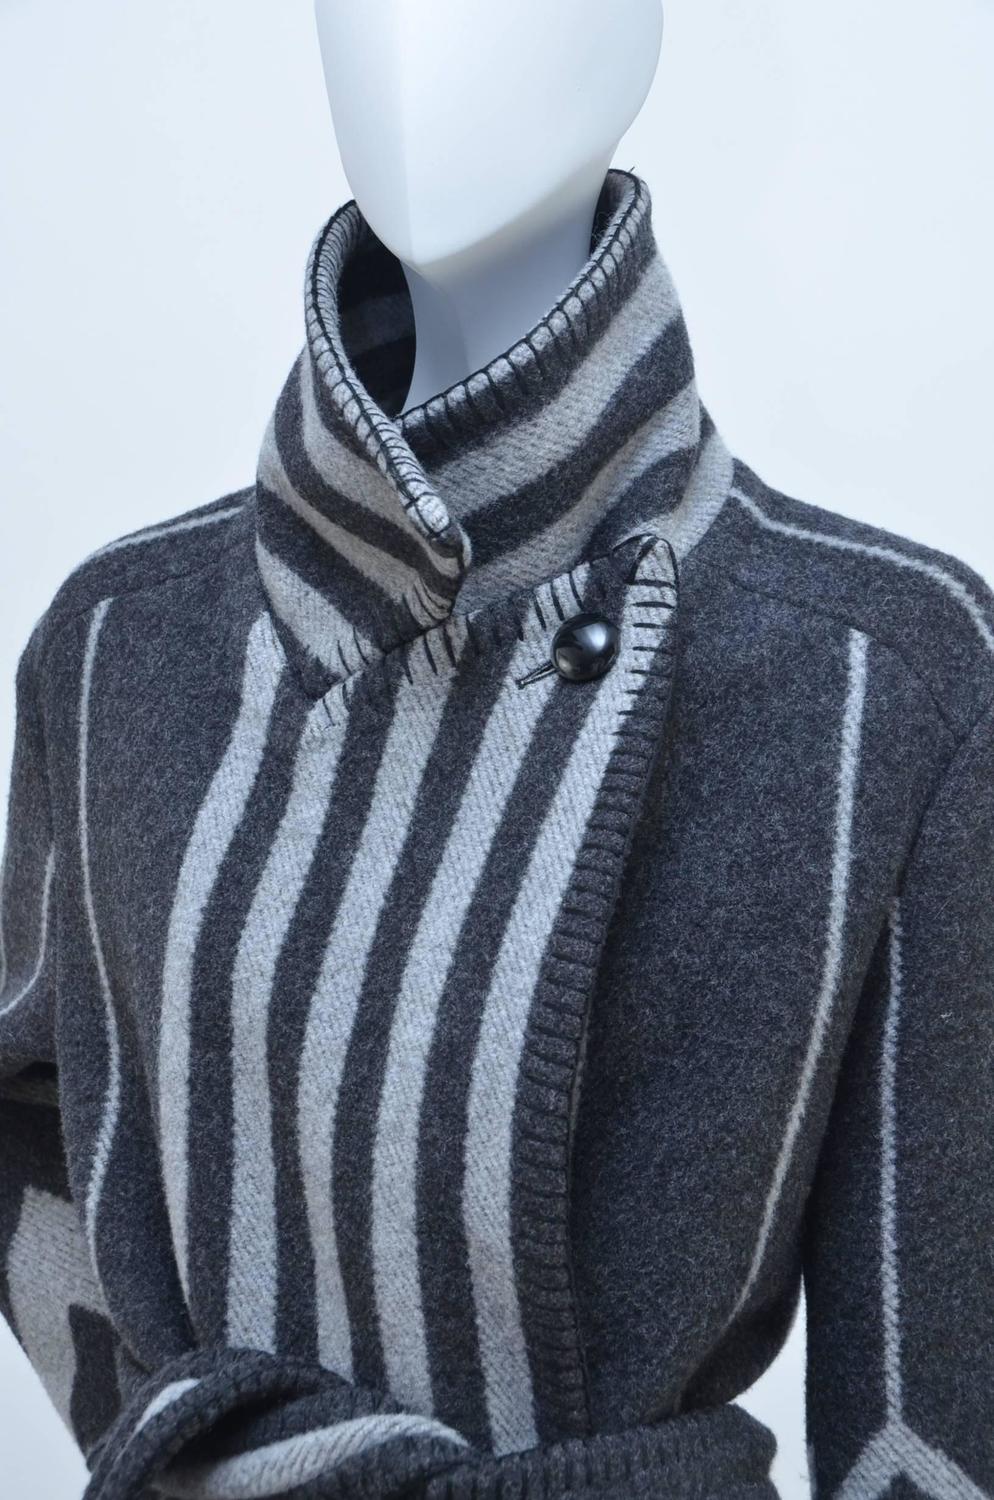 Louis Vuitton Beige Wool Cashmere Monogram Blanket - THE PURSE AFFAIR